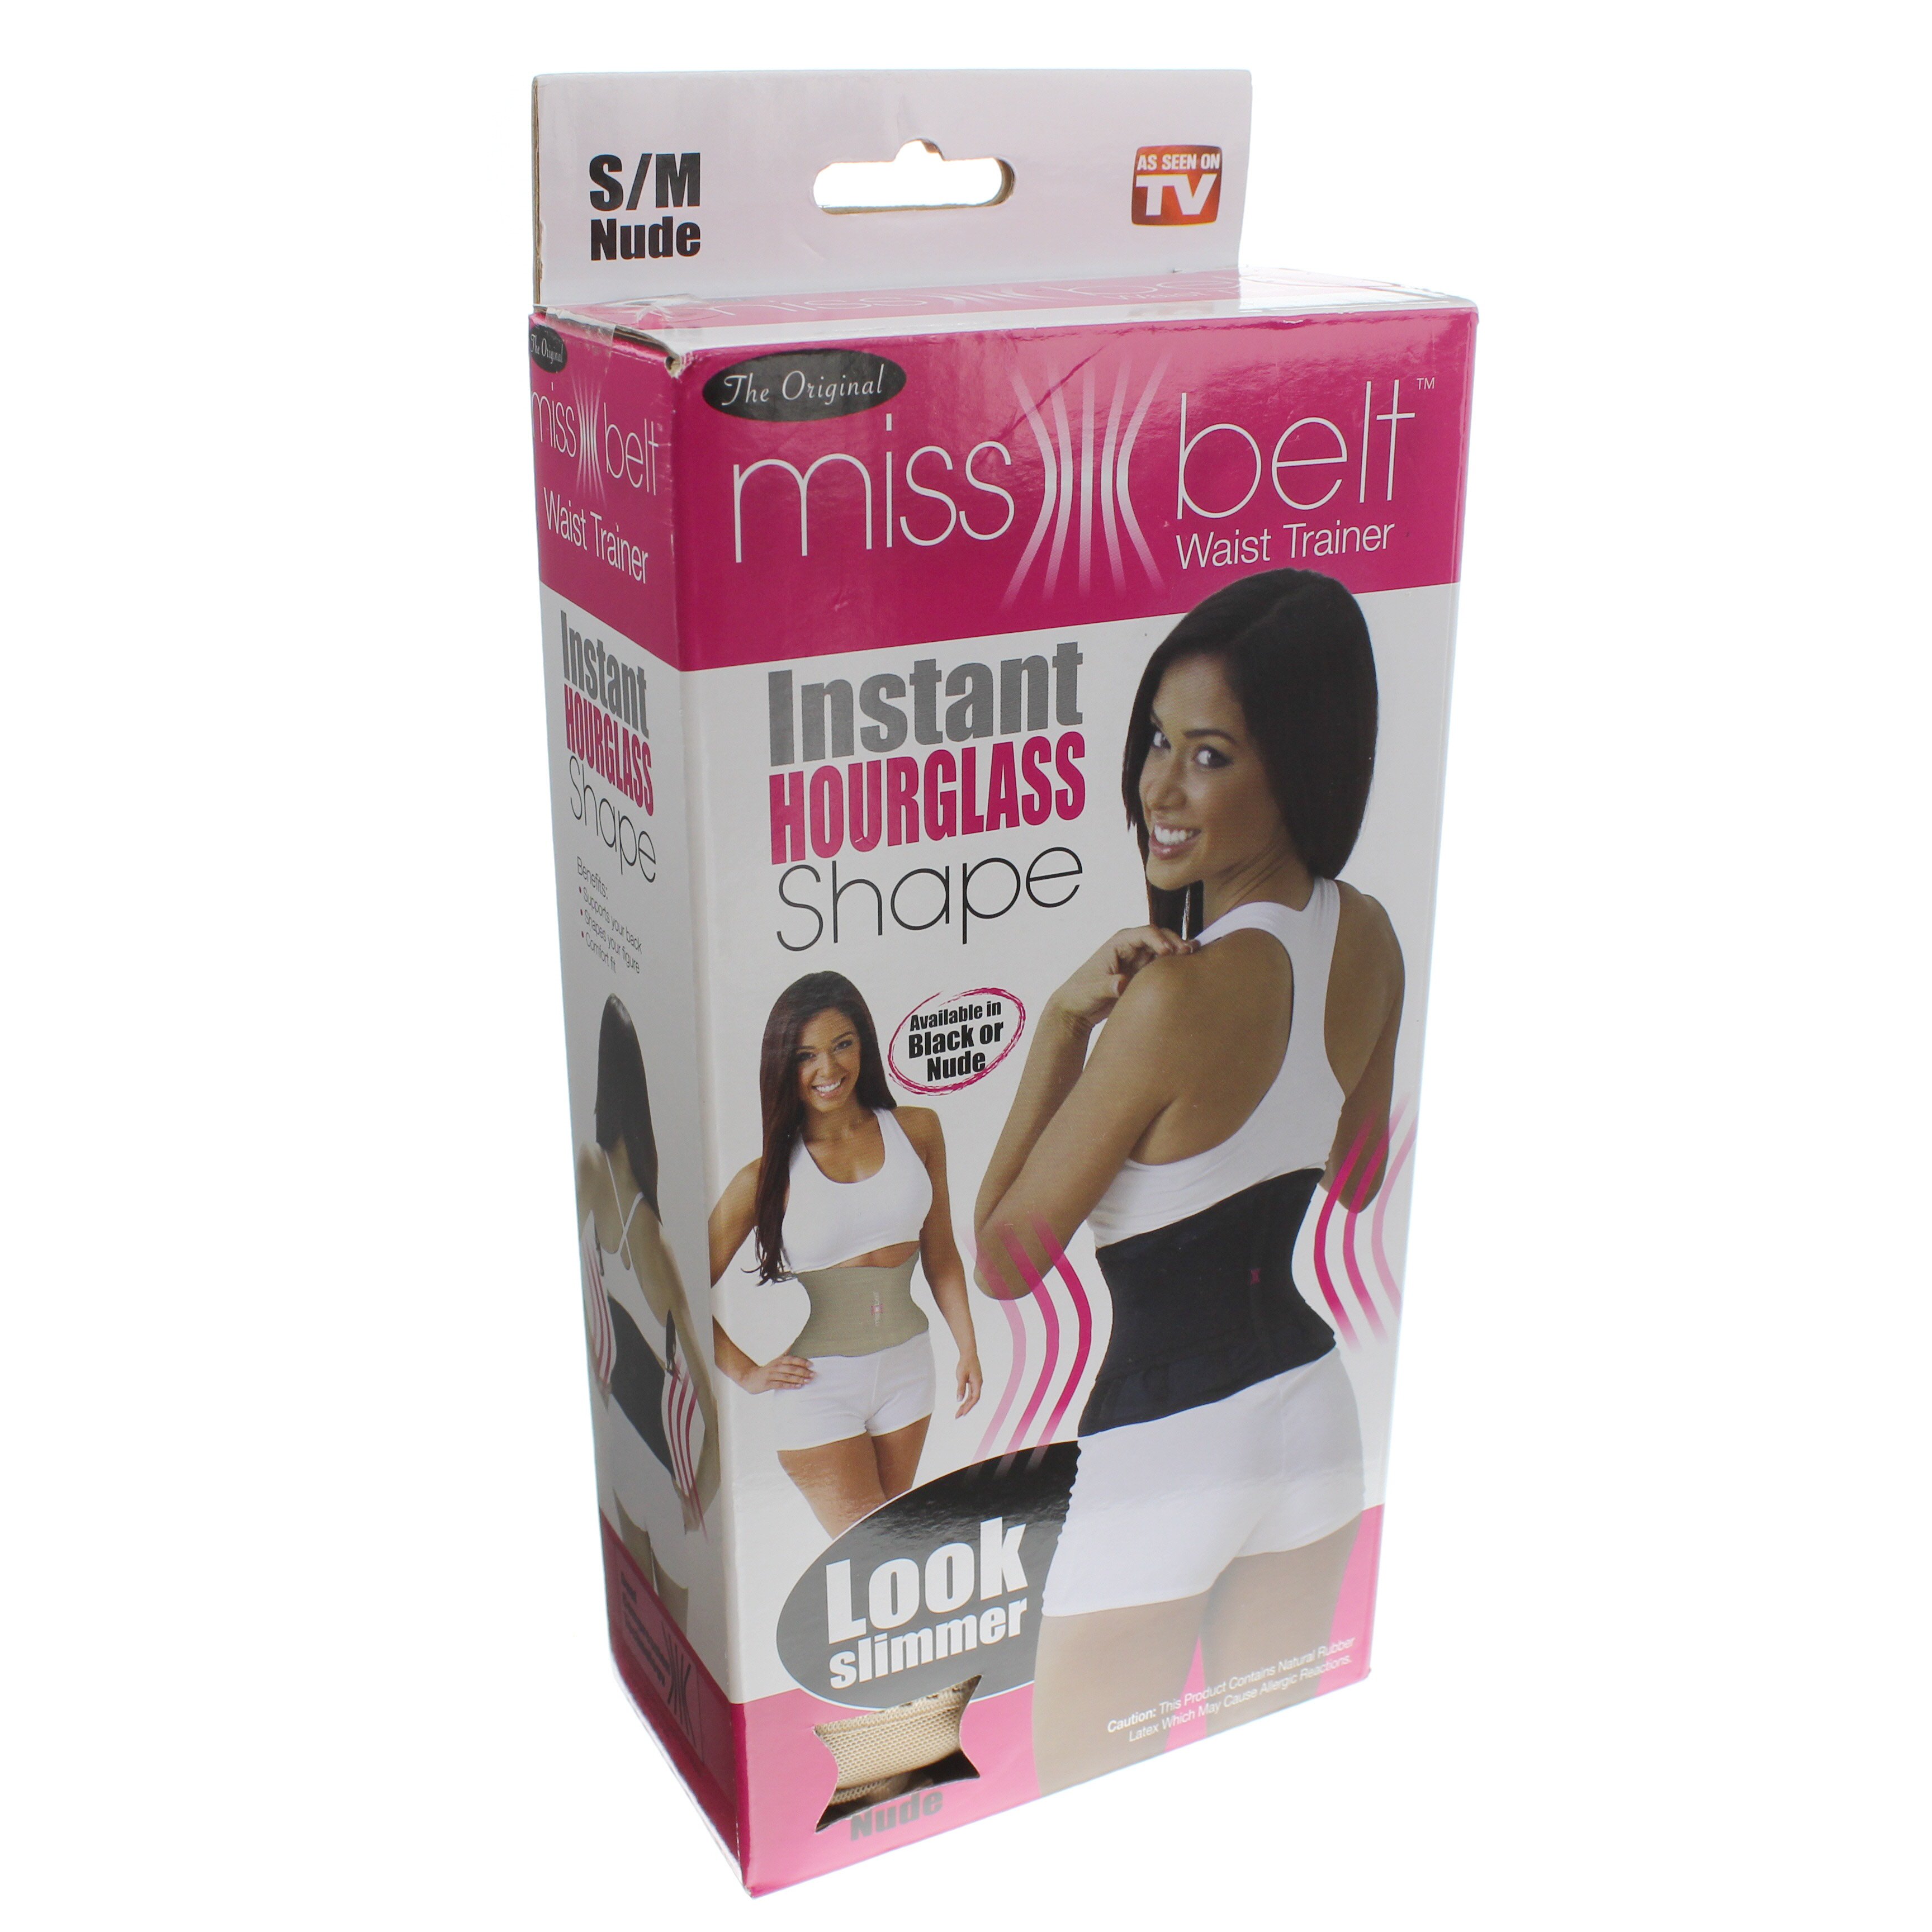 Miss Belt Instant Hourglass Body Shaper/Waist Trimmer - Nude